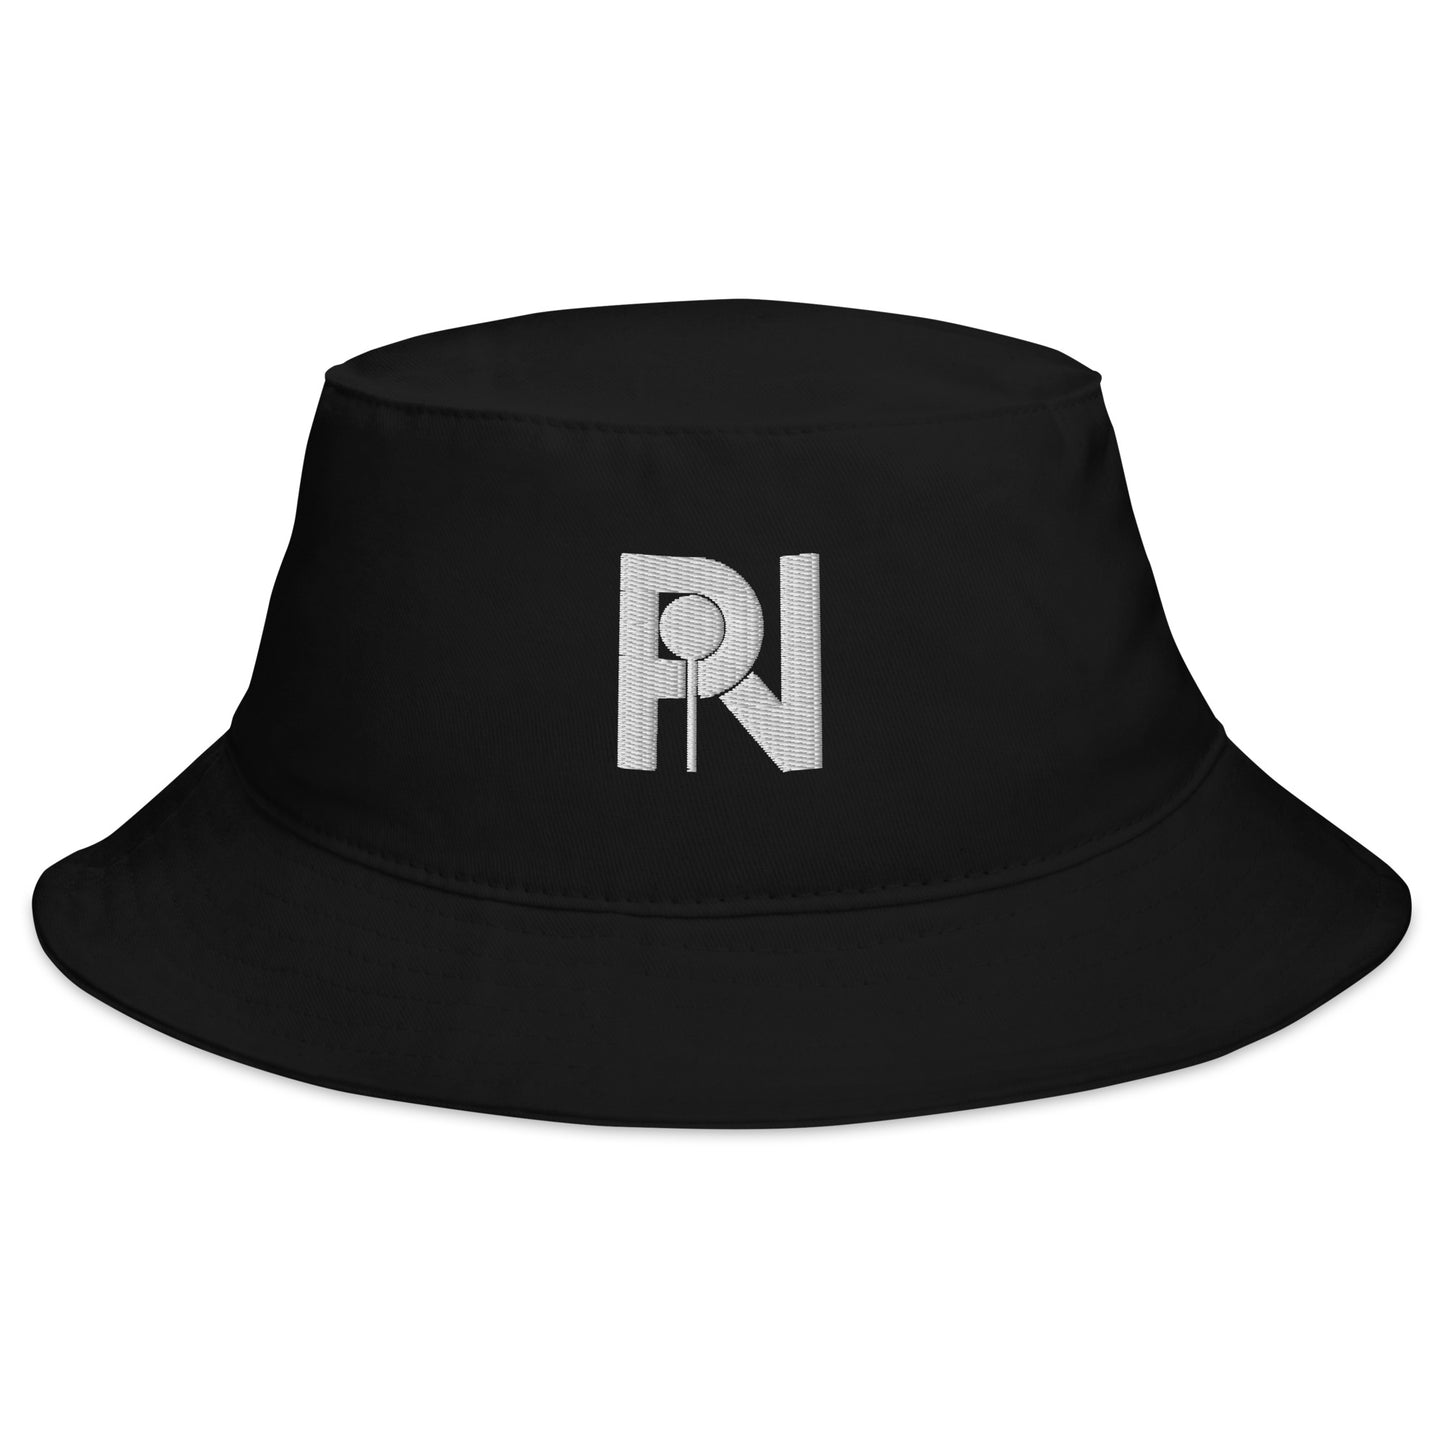 Unisex simple logo bucket hat